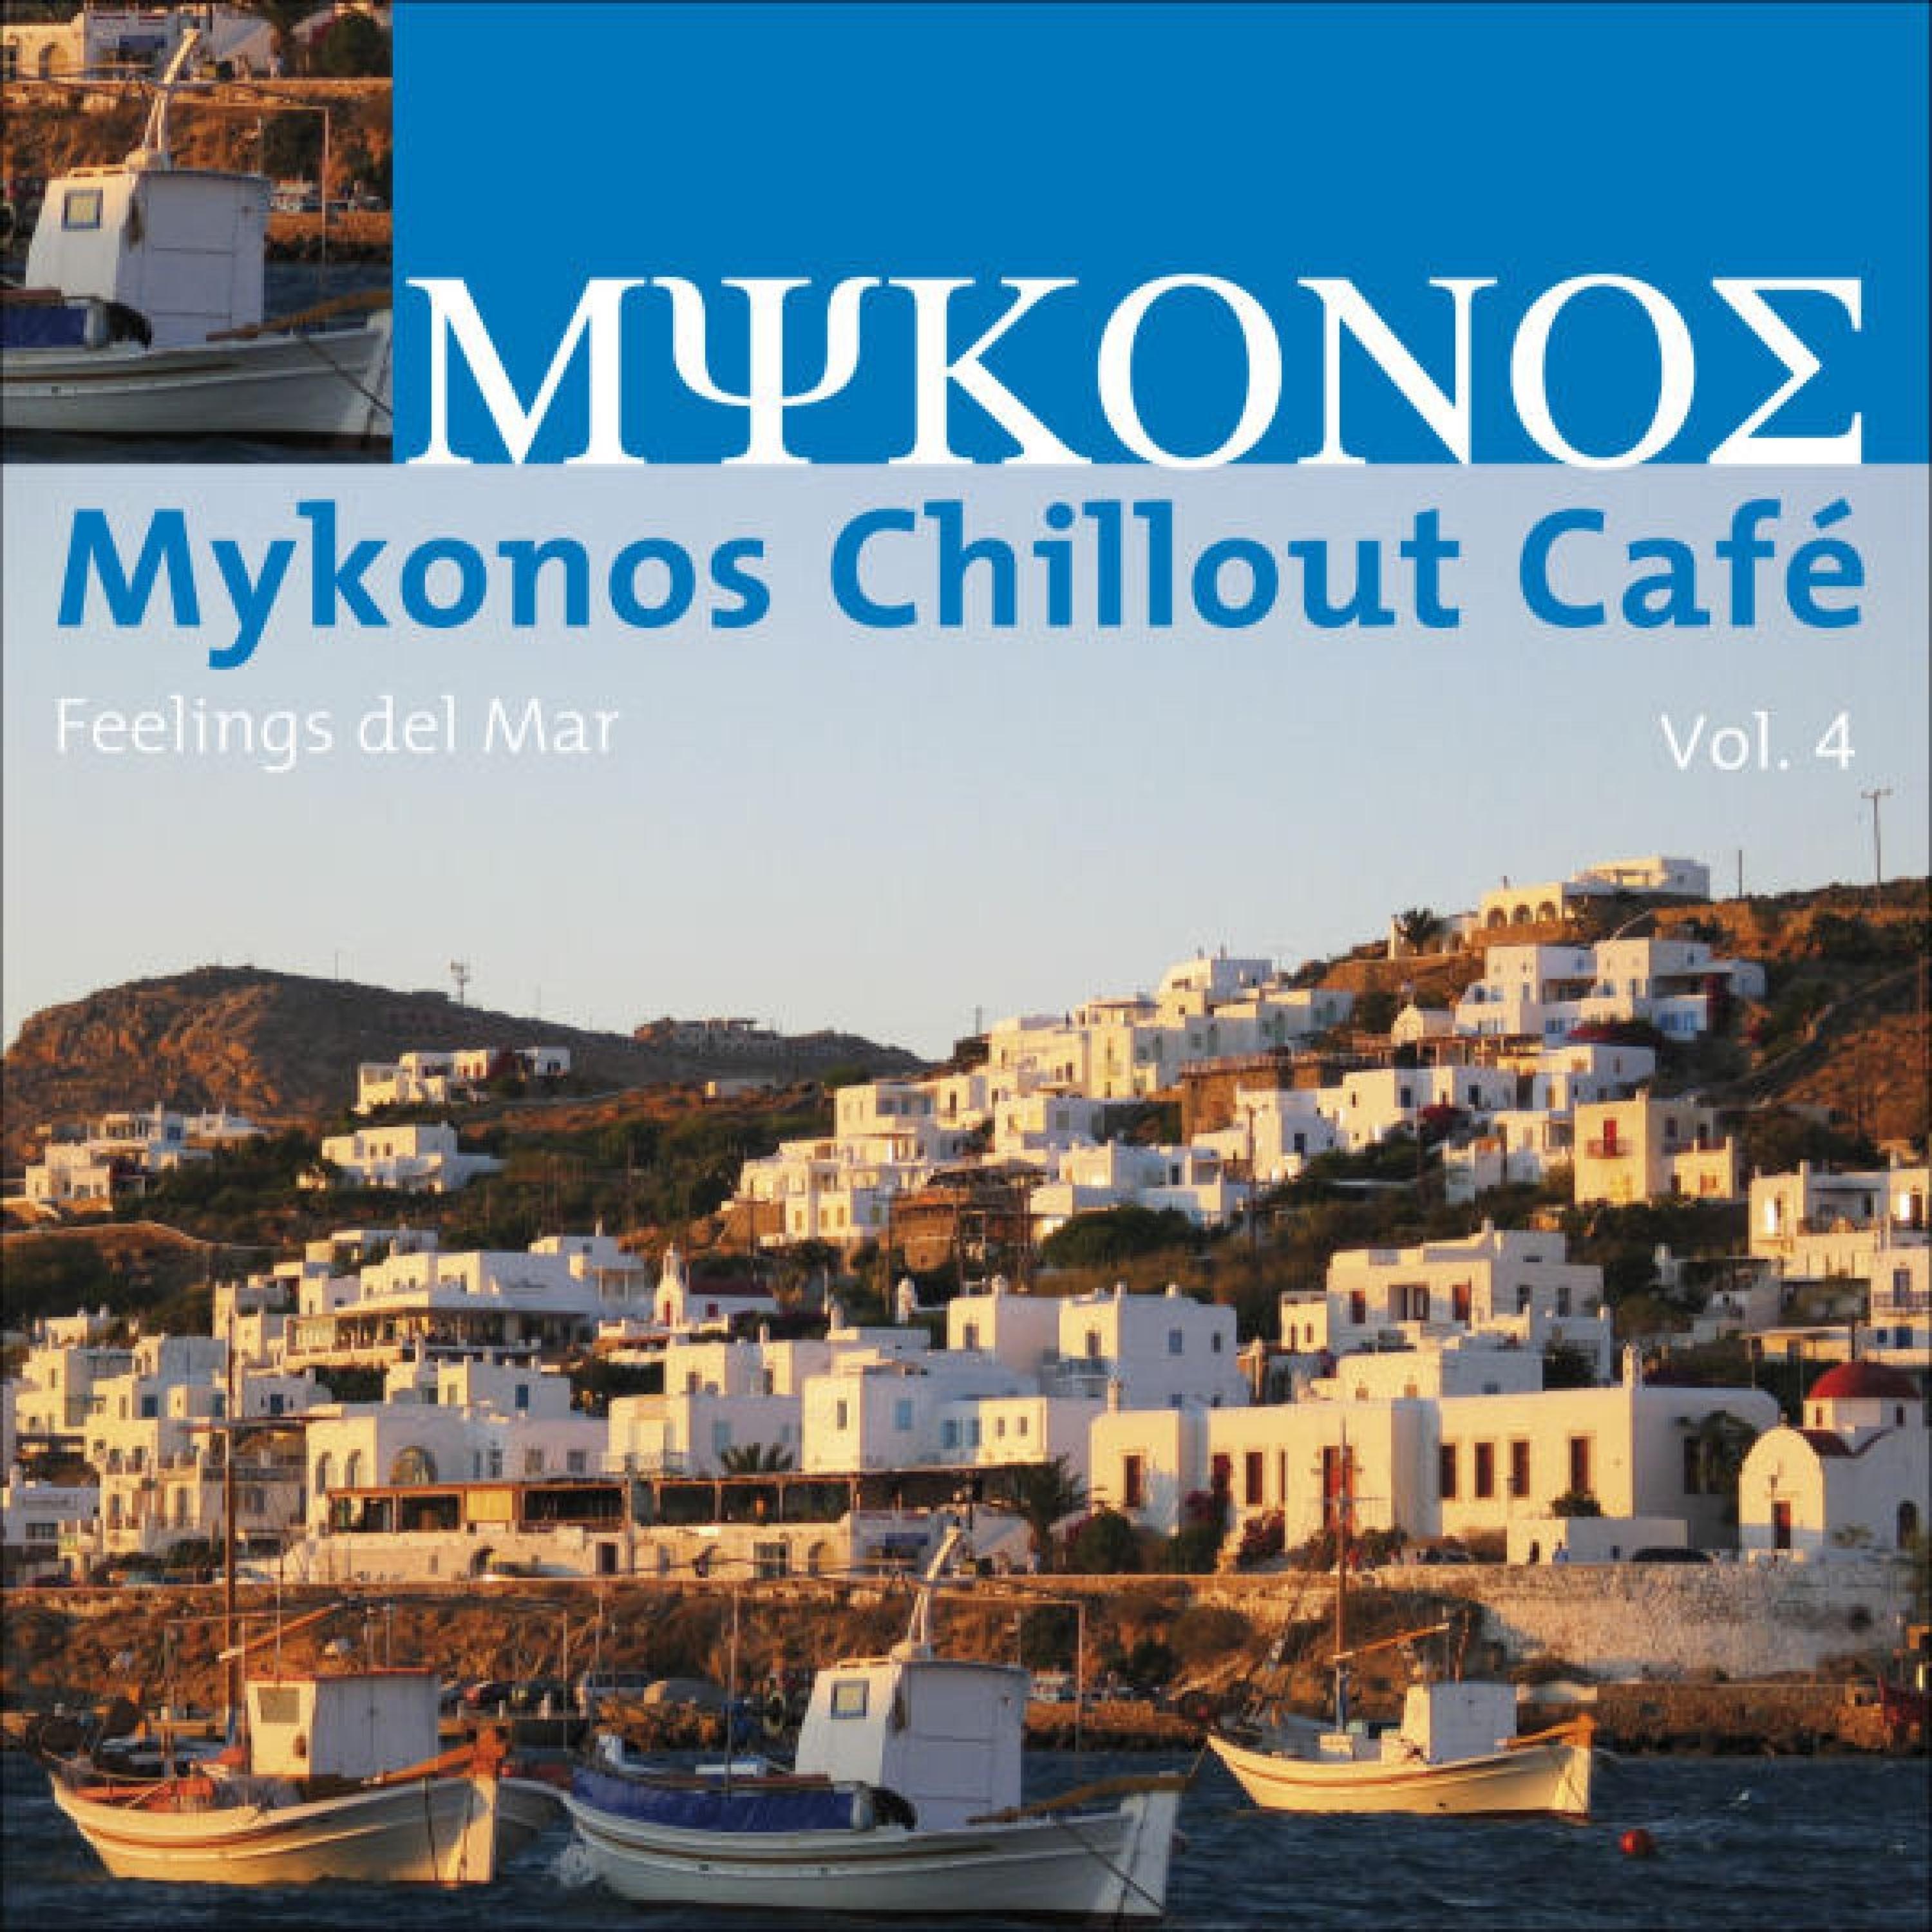 Mykonos Chillout Cafe, Vol. 4 Feelings Del Mar